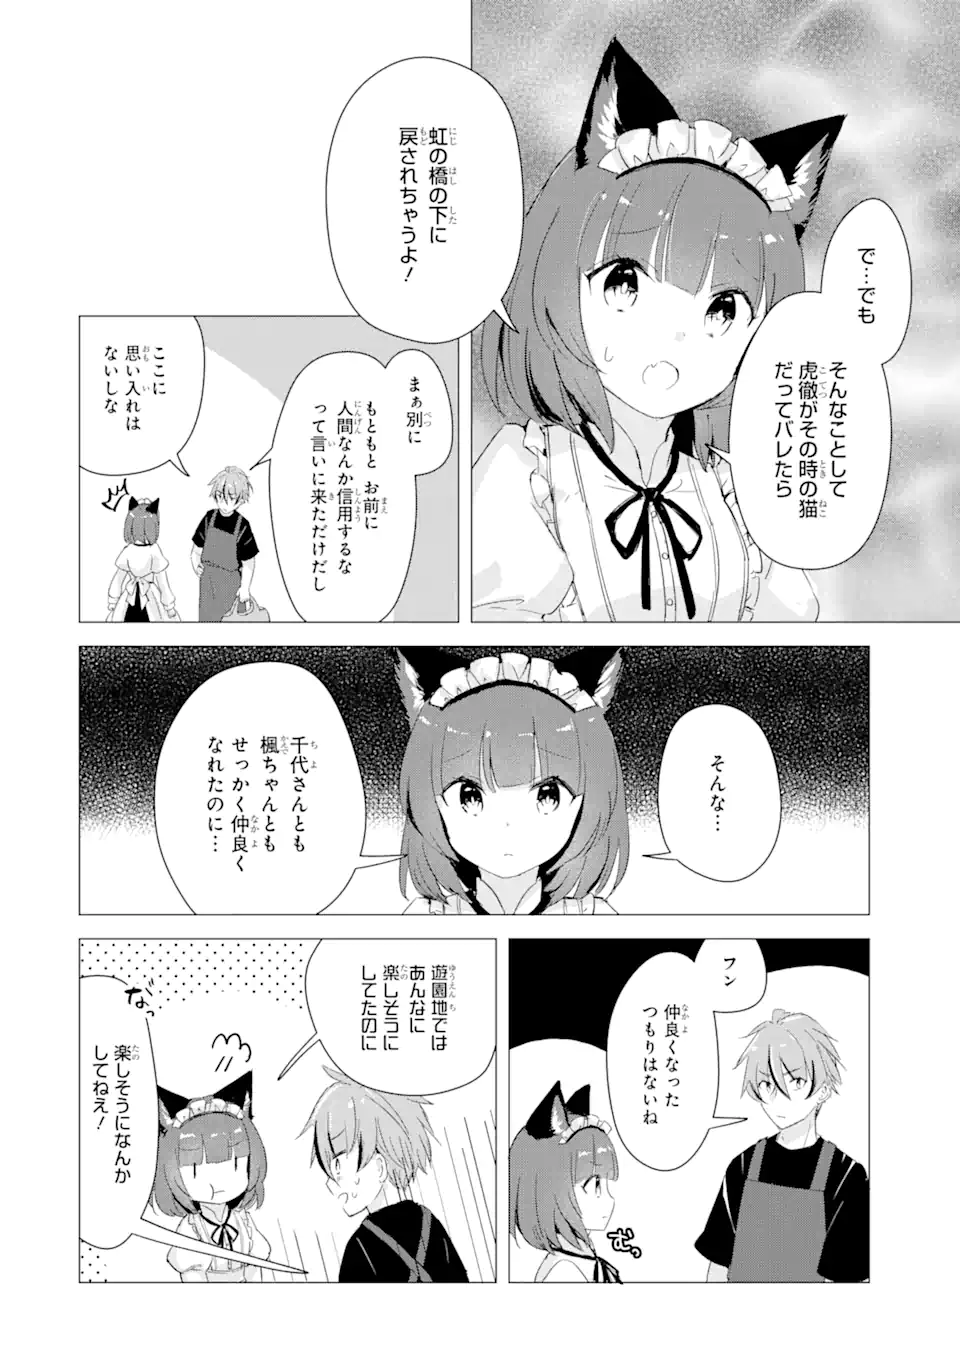 Komugi ga Jiman no Panya-san - Chapter 12 - Page 16